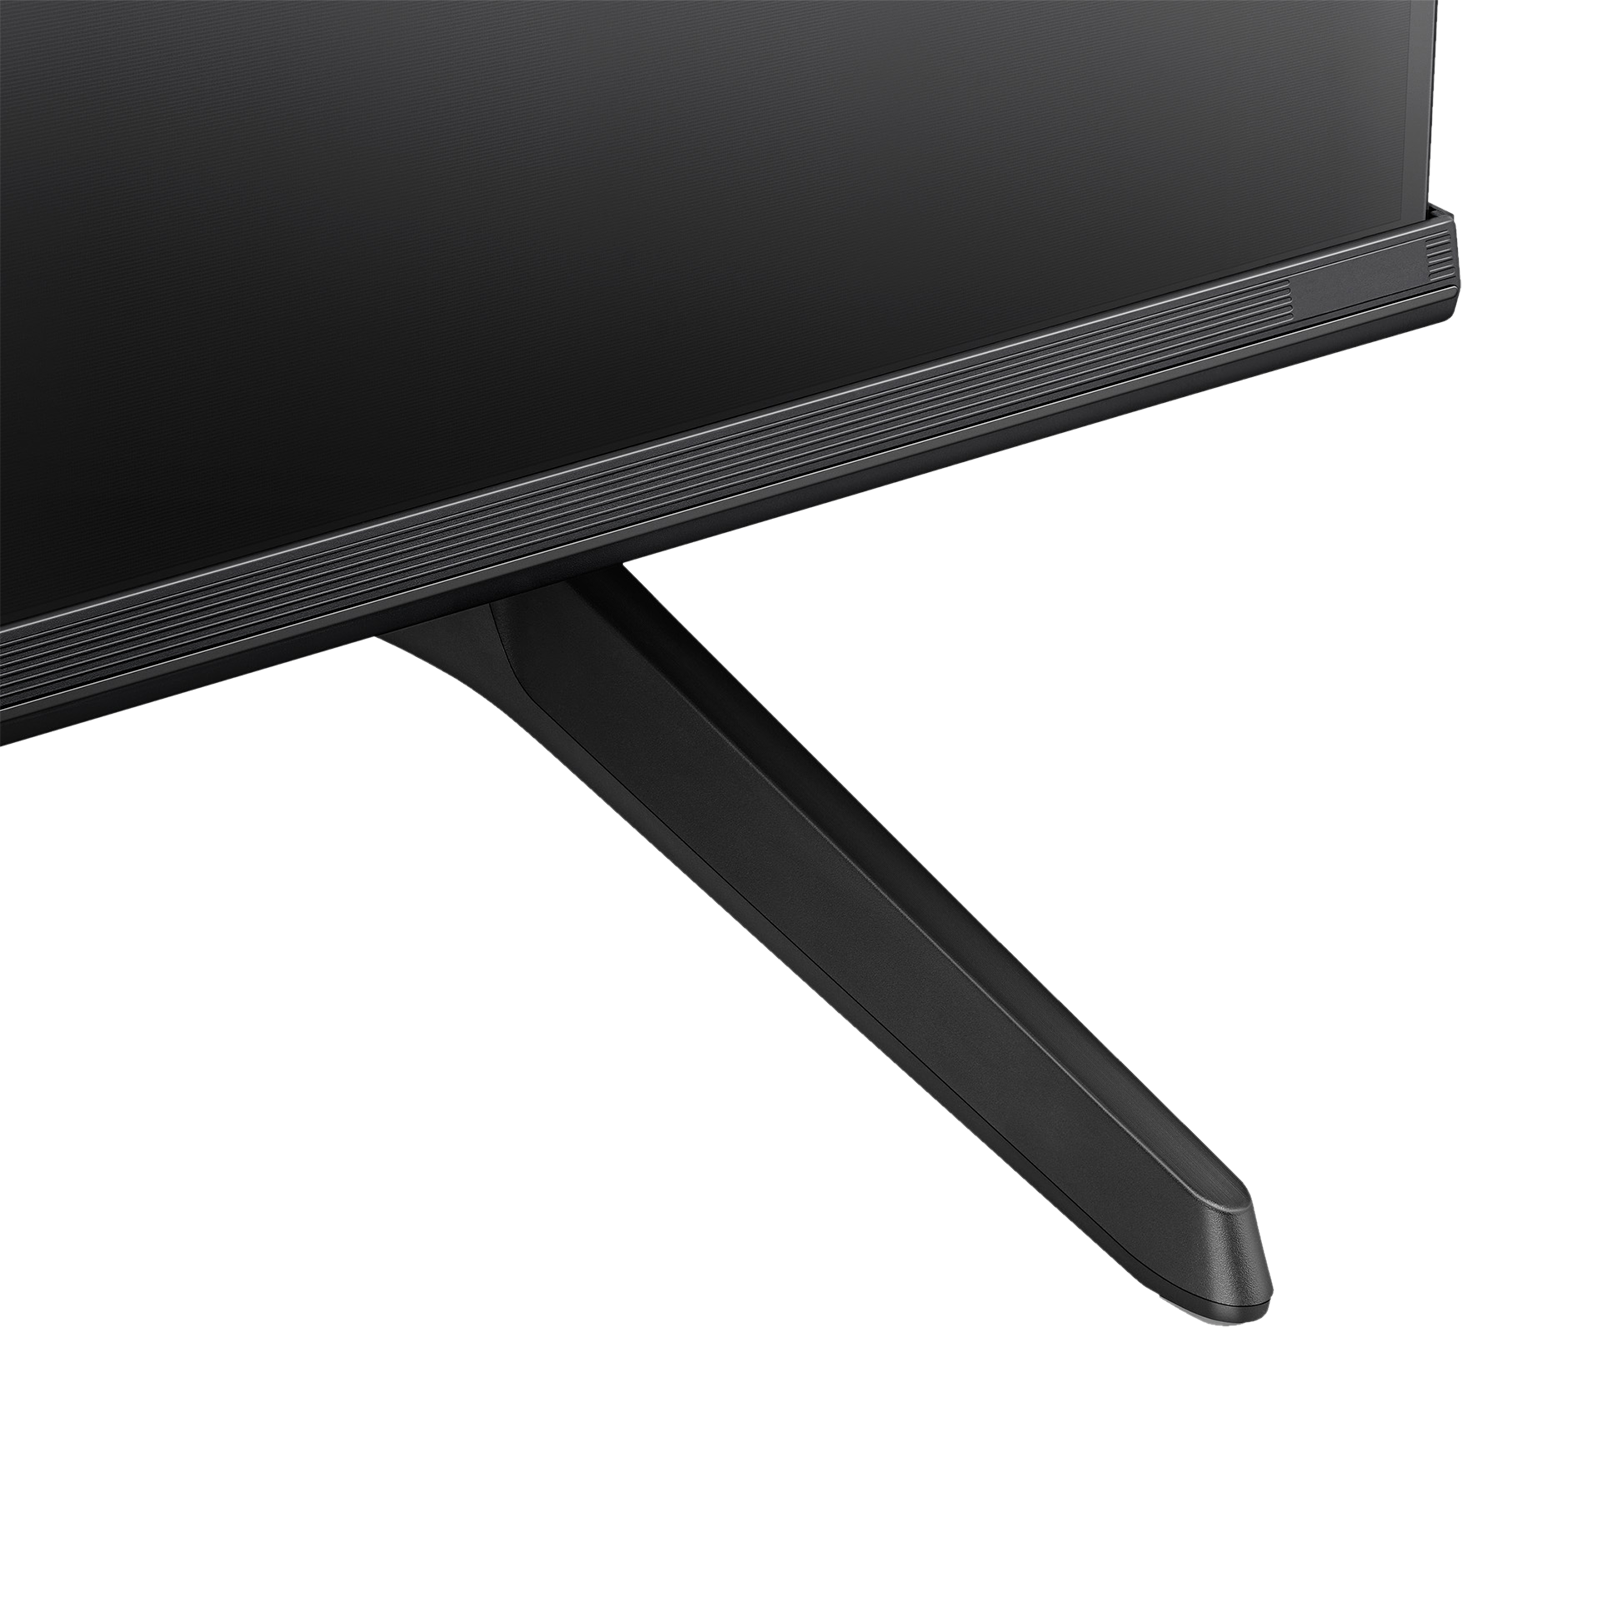 Hisense A6K 55 inch Ultra HD (4K) VA Panel (55A6K) TV Price , Images, News,  Reviews & Specs